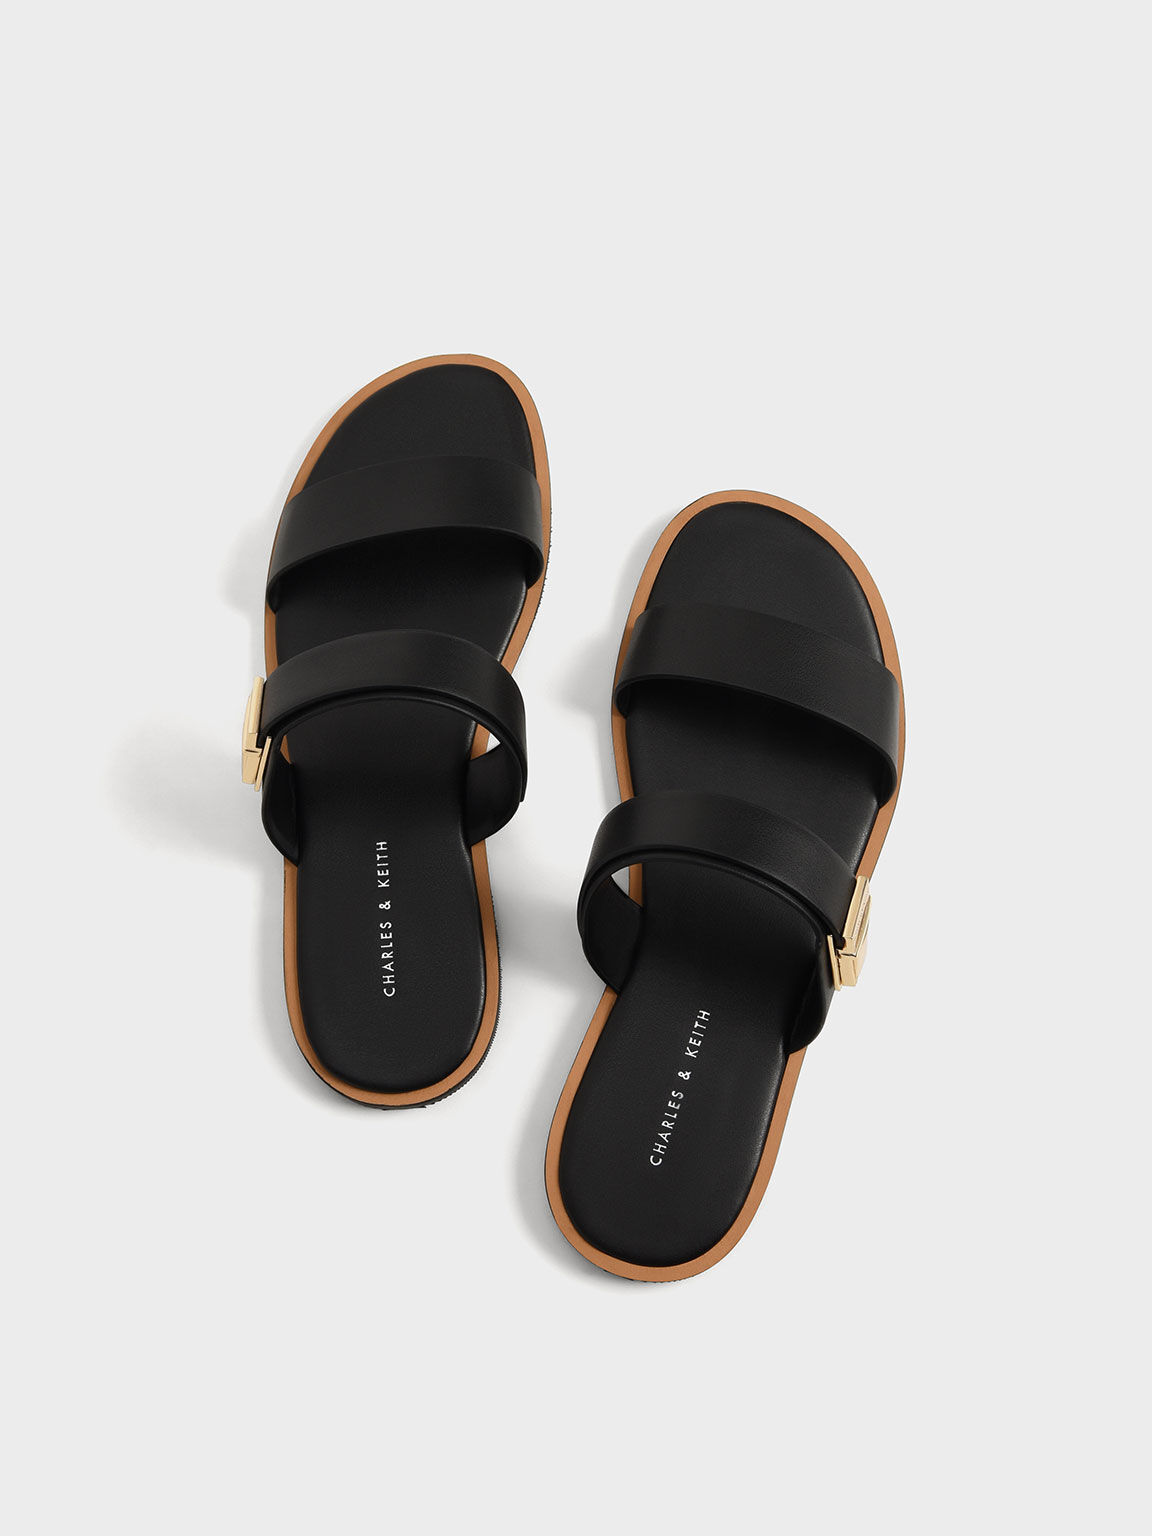 Metallic Buckle Slide Sandals, Black, hi-res